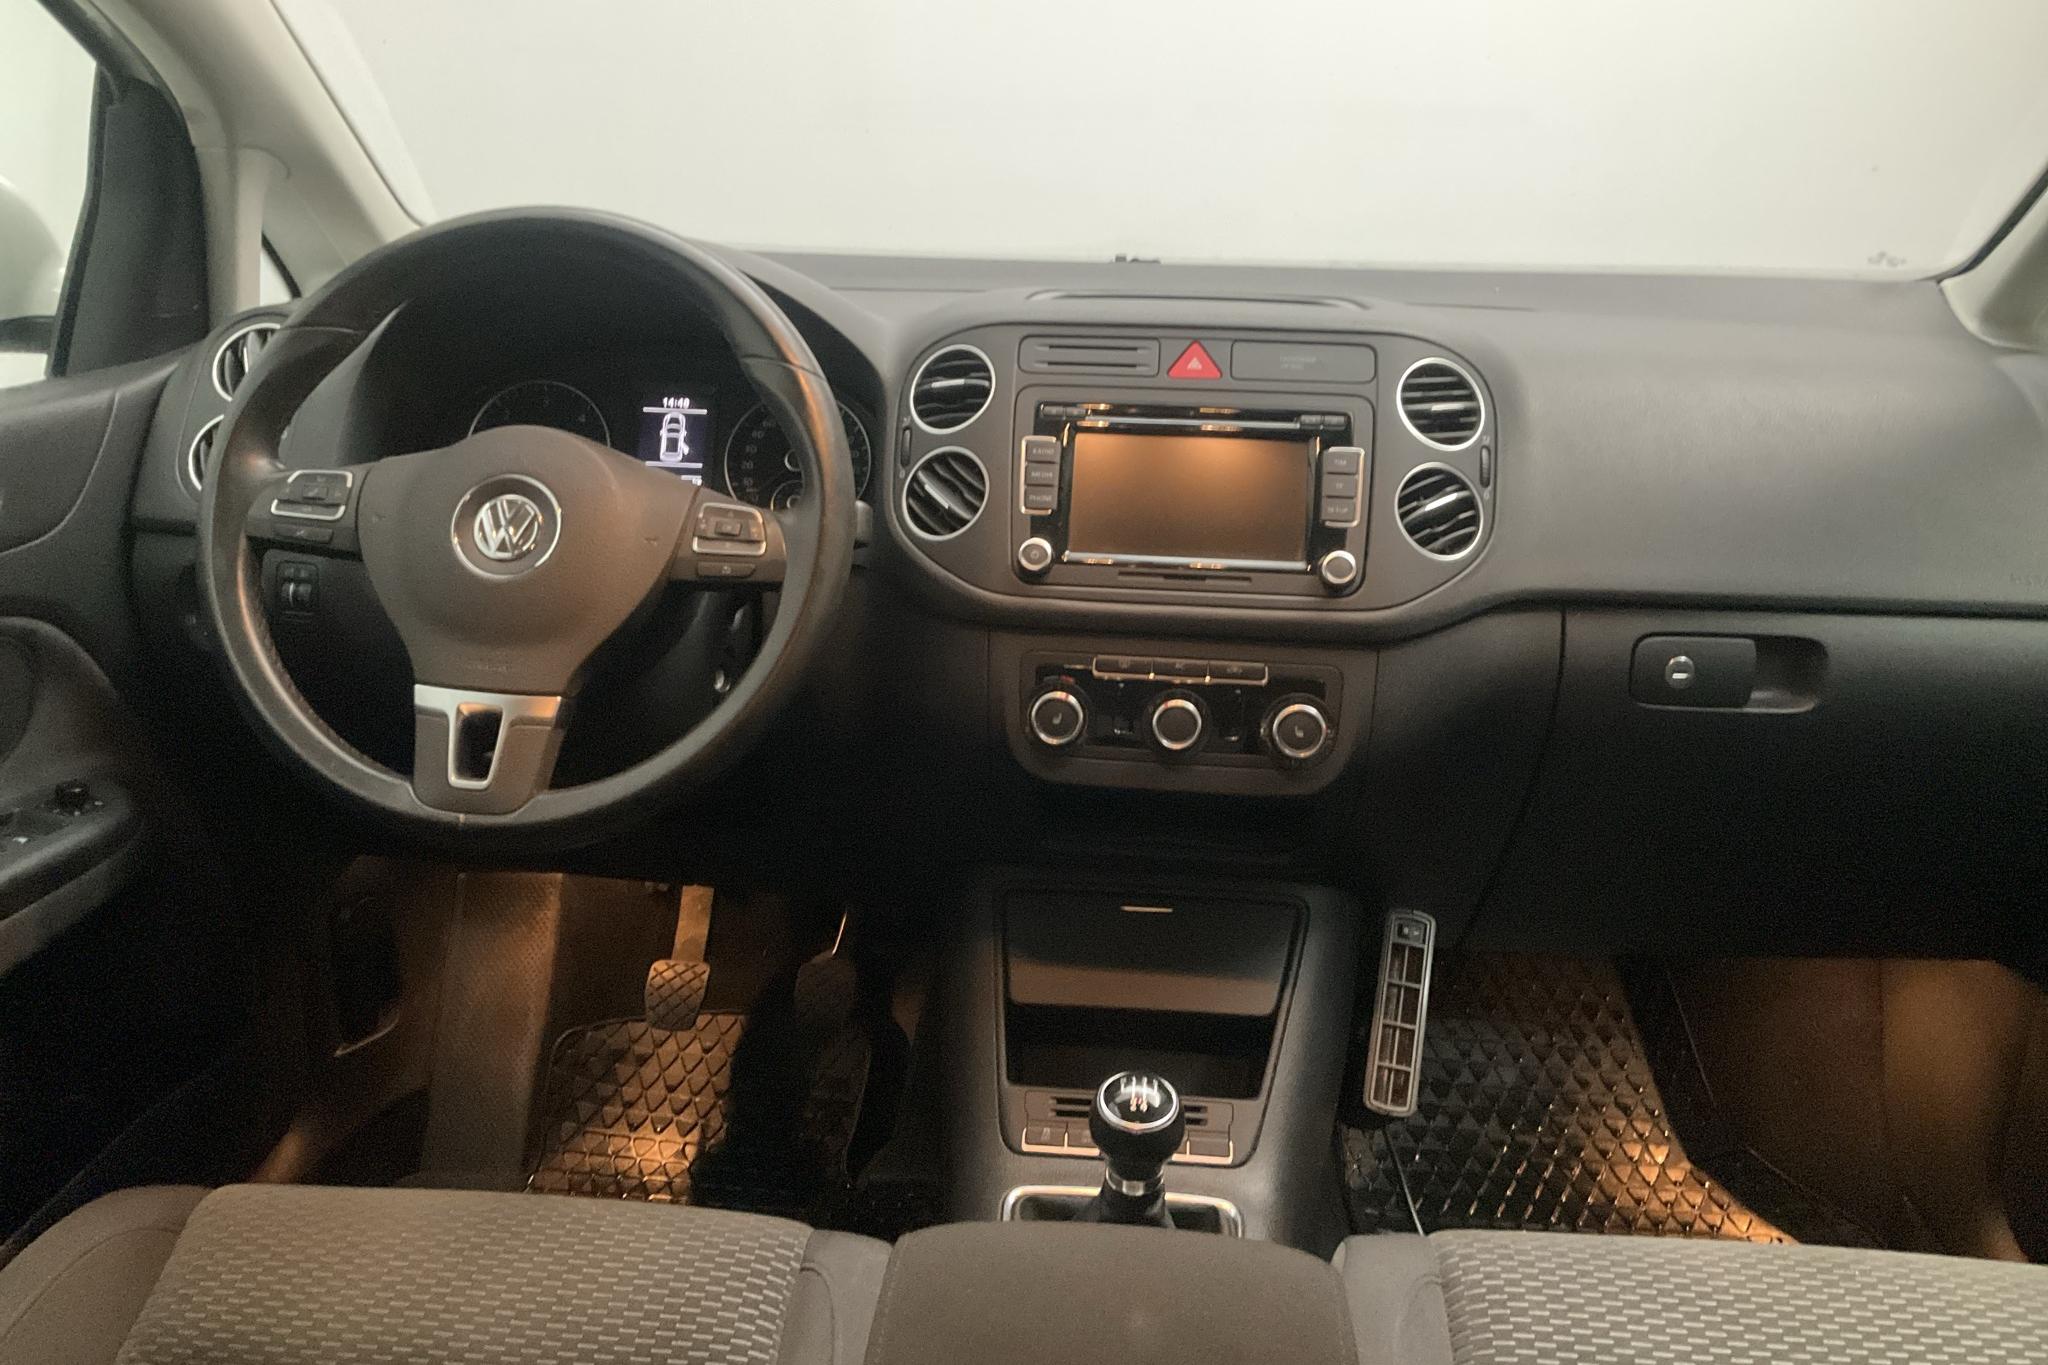 VW Golf Plus VI 1.6 TDI BlueMotion Technology Plus (105hk) - 8 161 mil - Manuell - vit - 2012